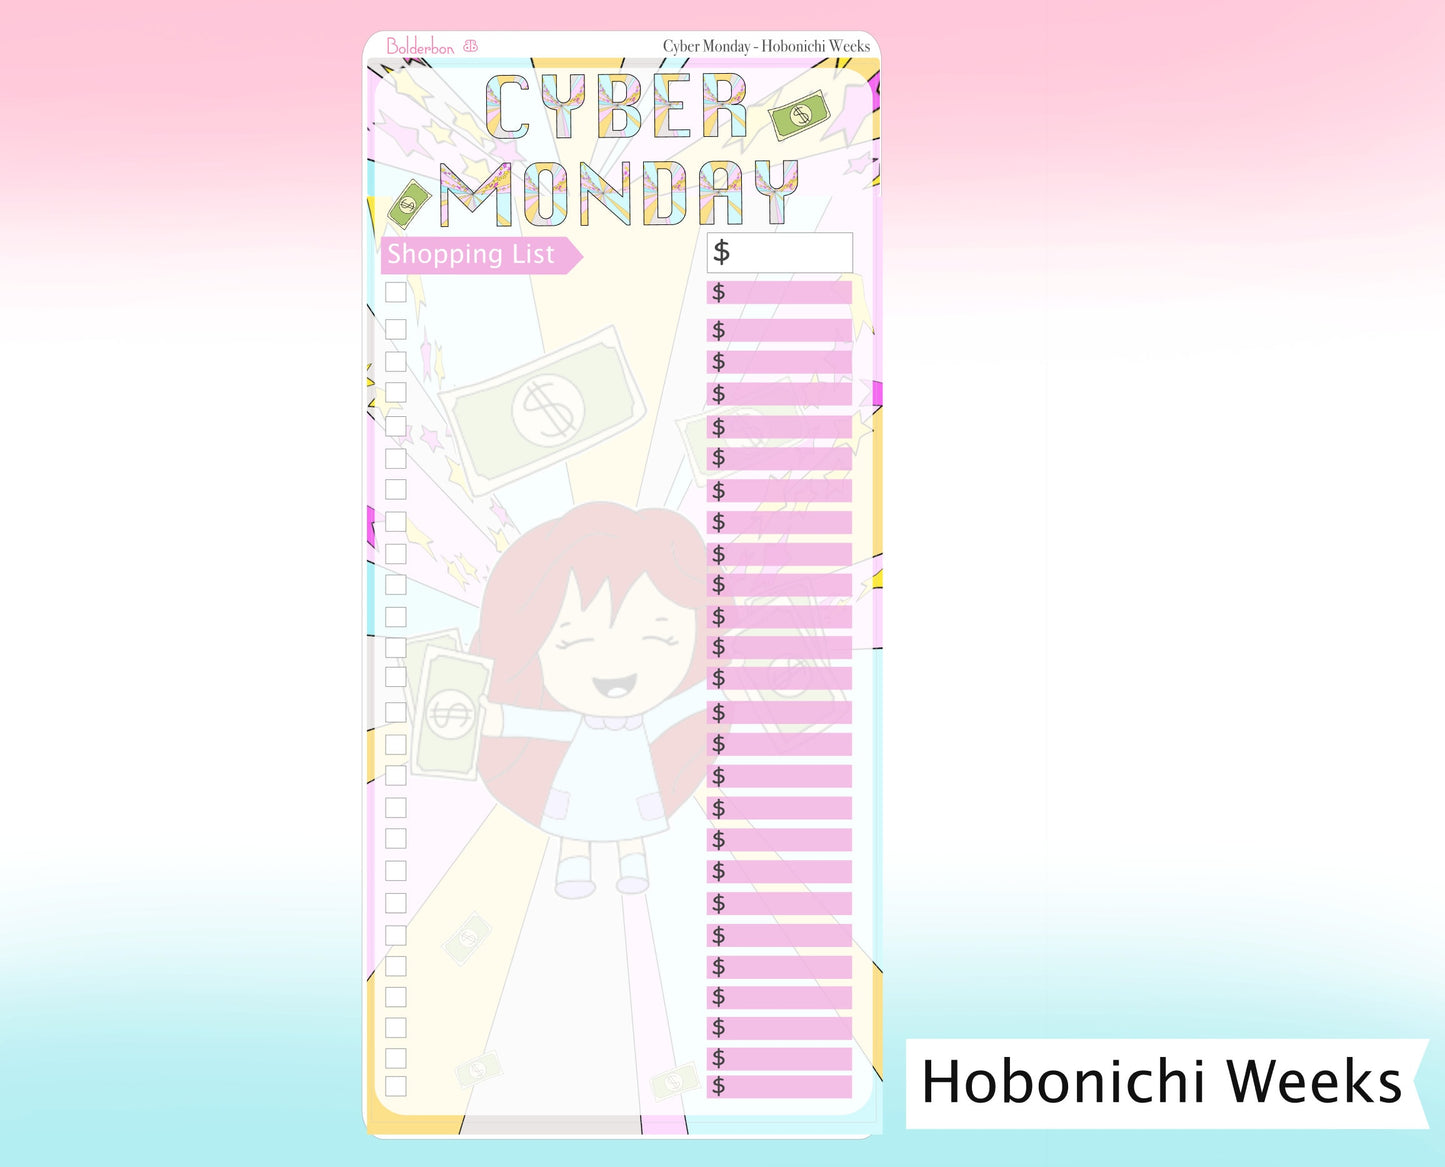 Black Friday & Cyber Monday || Hobonichi Weeks Full Sticker Sheets